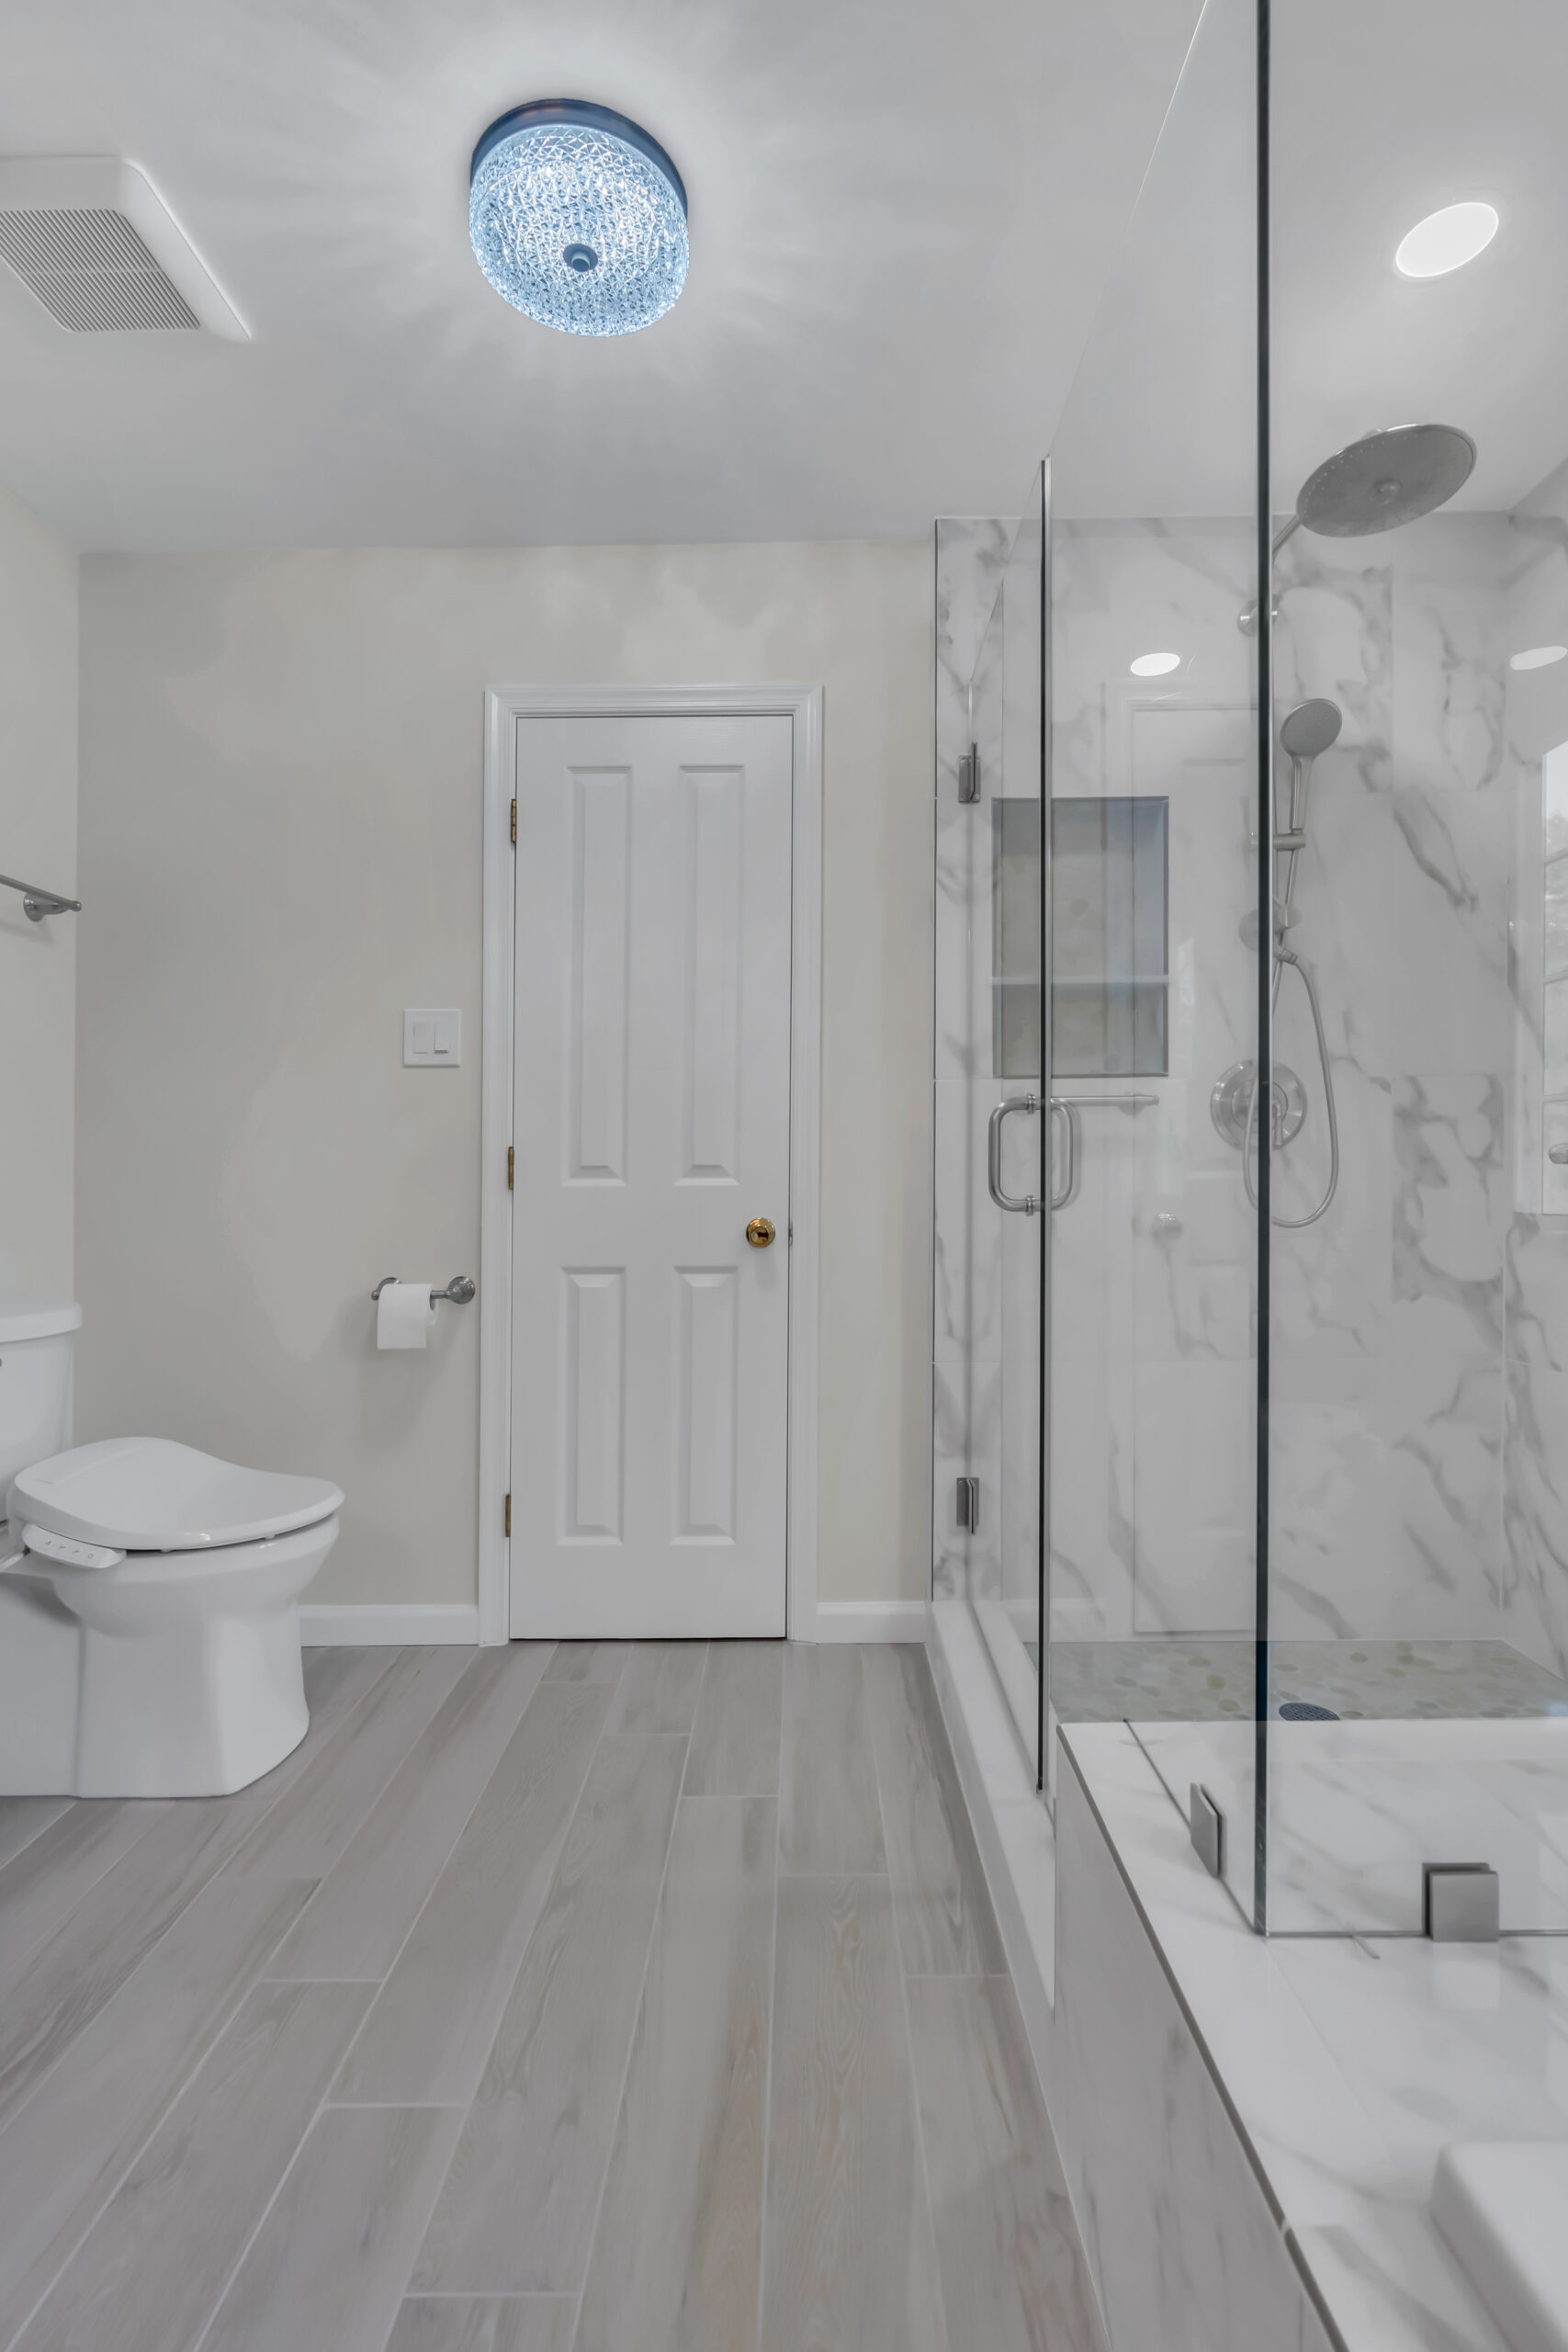 Spacious, luxury bathroom style with bath tub and a shower